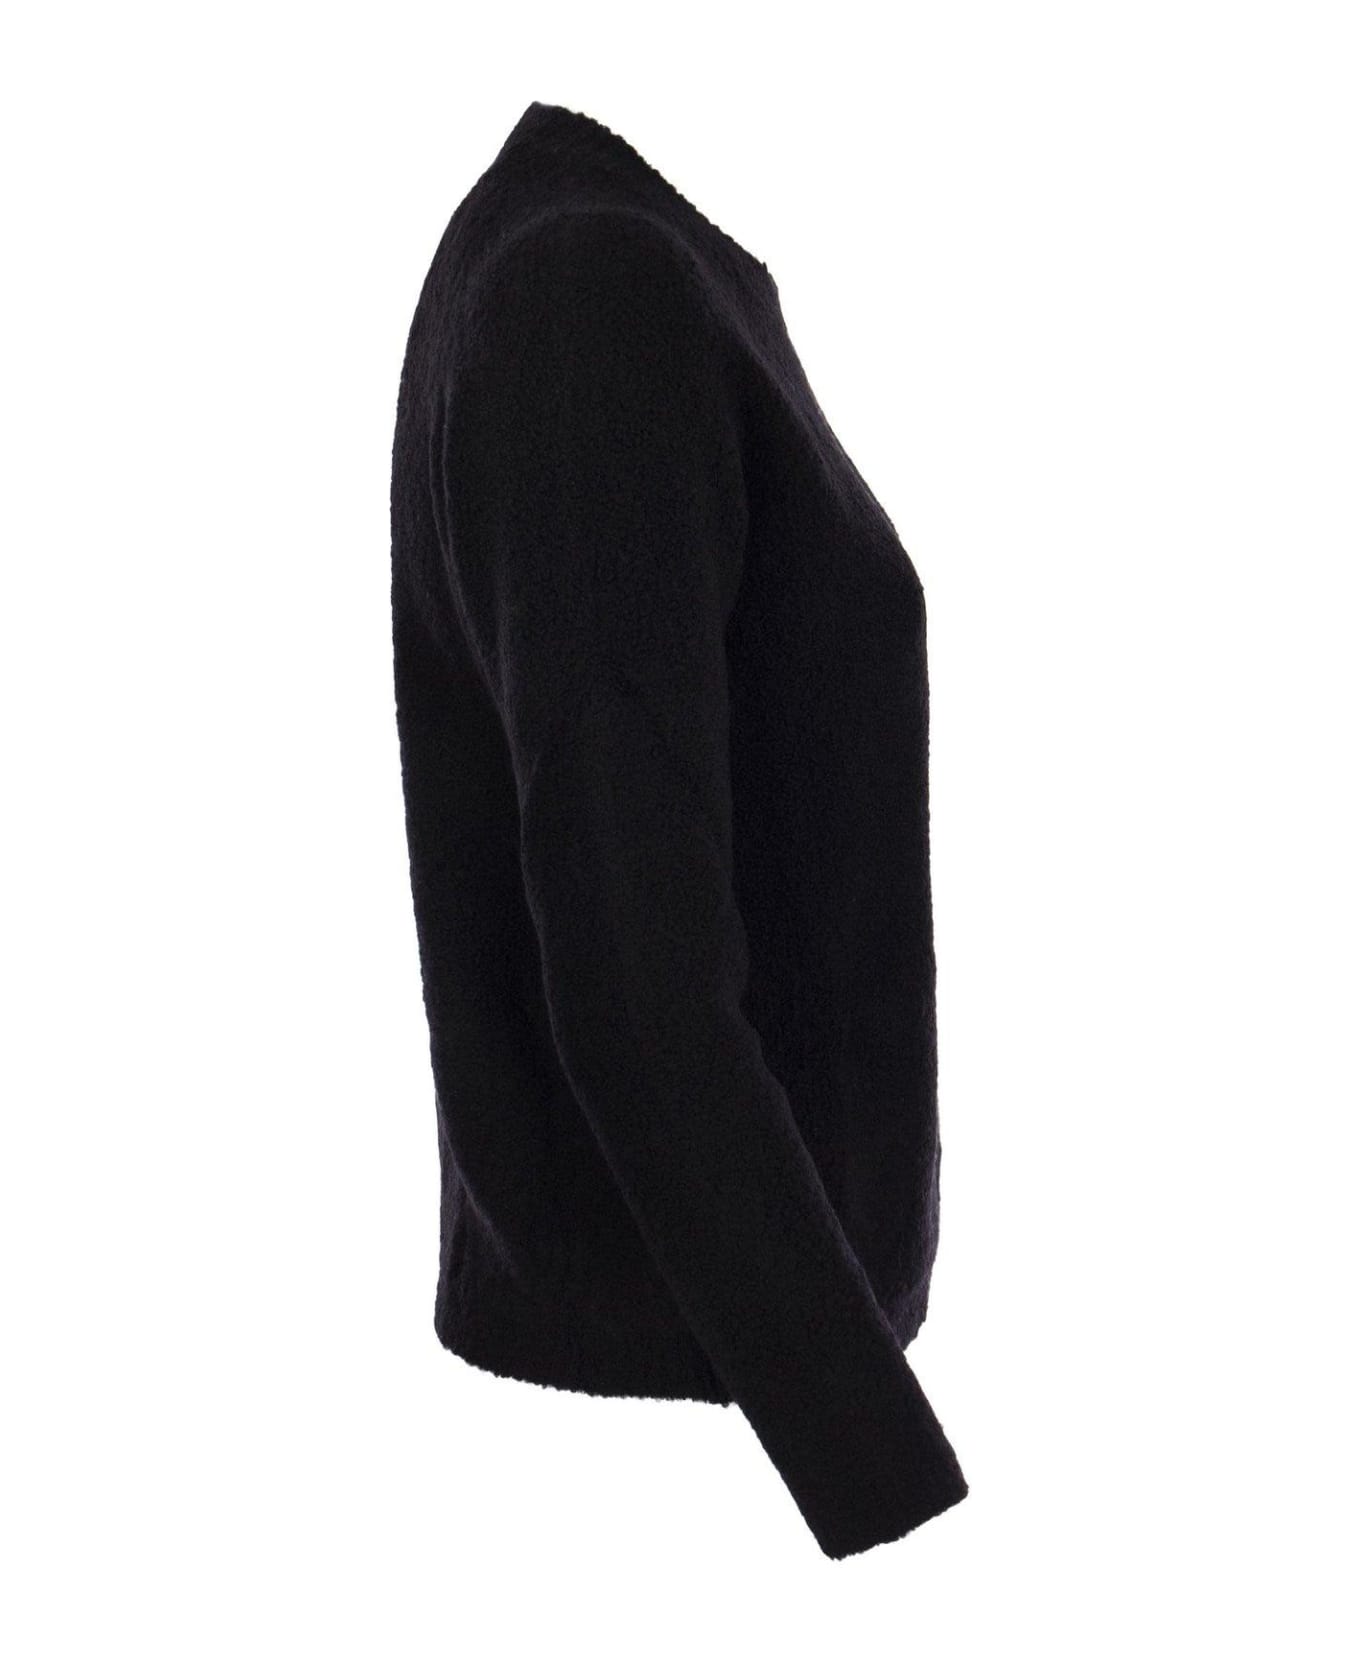 Max Mara Studio Fify Sweater - Black ニットウェア